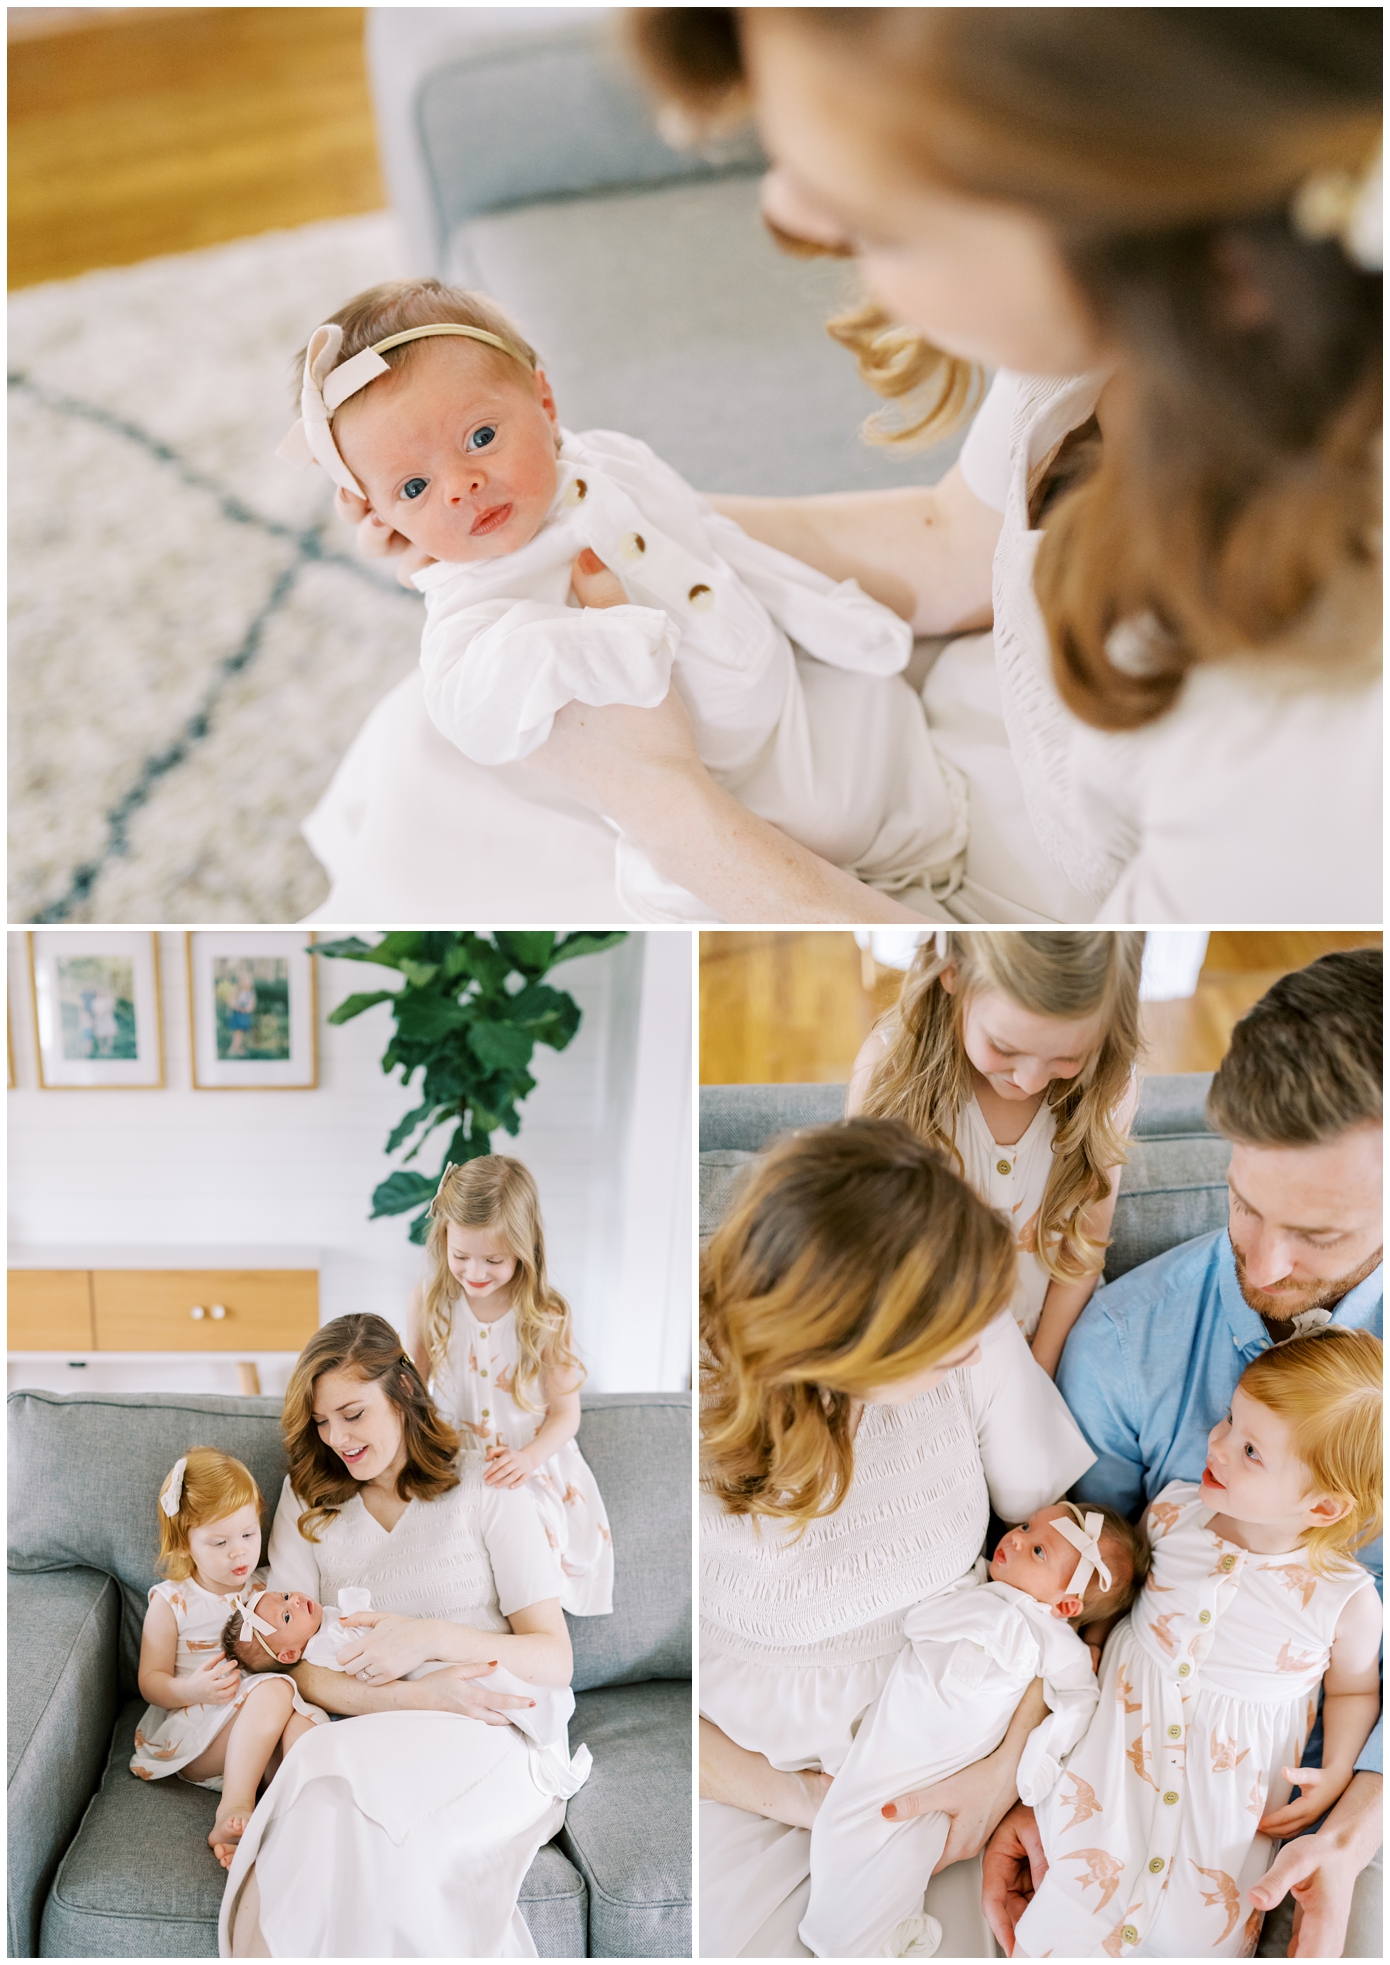 Lindsey Powell Photography, Atlanta Family Photographer, Marietta Family Photographer, Vinnings, Buckhead, Studio Newborn Family Session